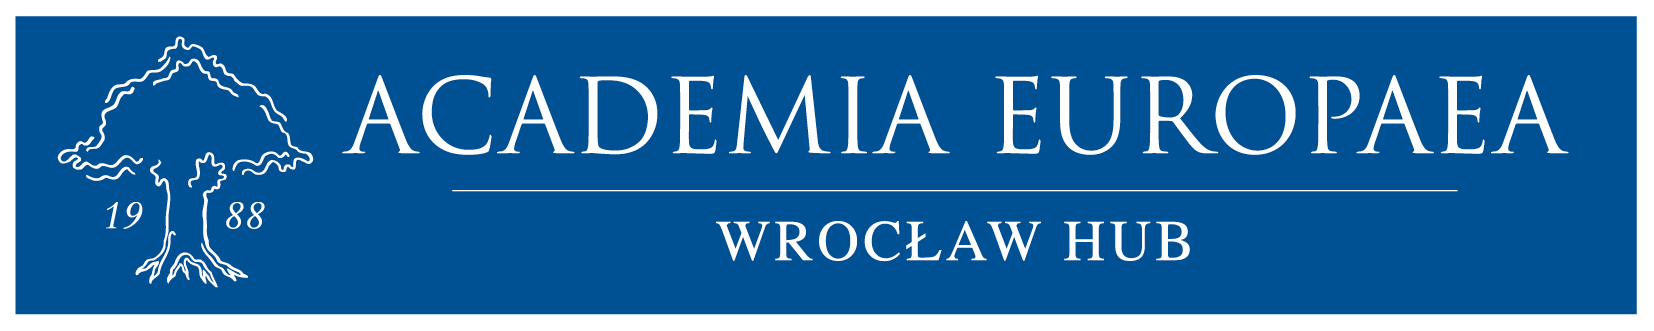 Academia Europaea - Wrocław Knowledge Hub